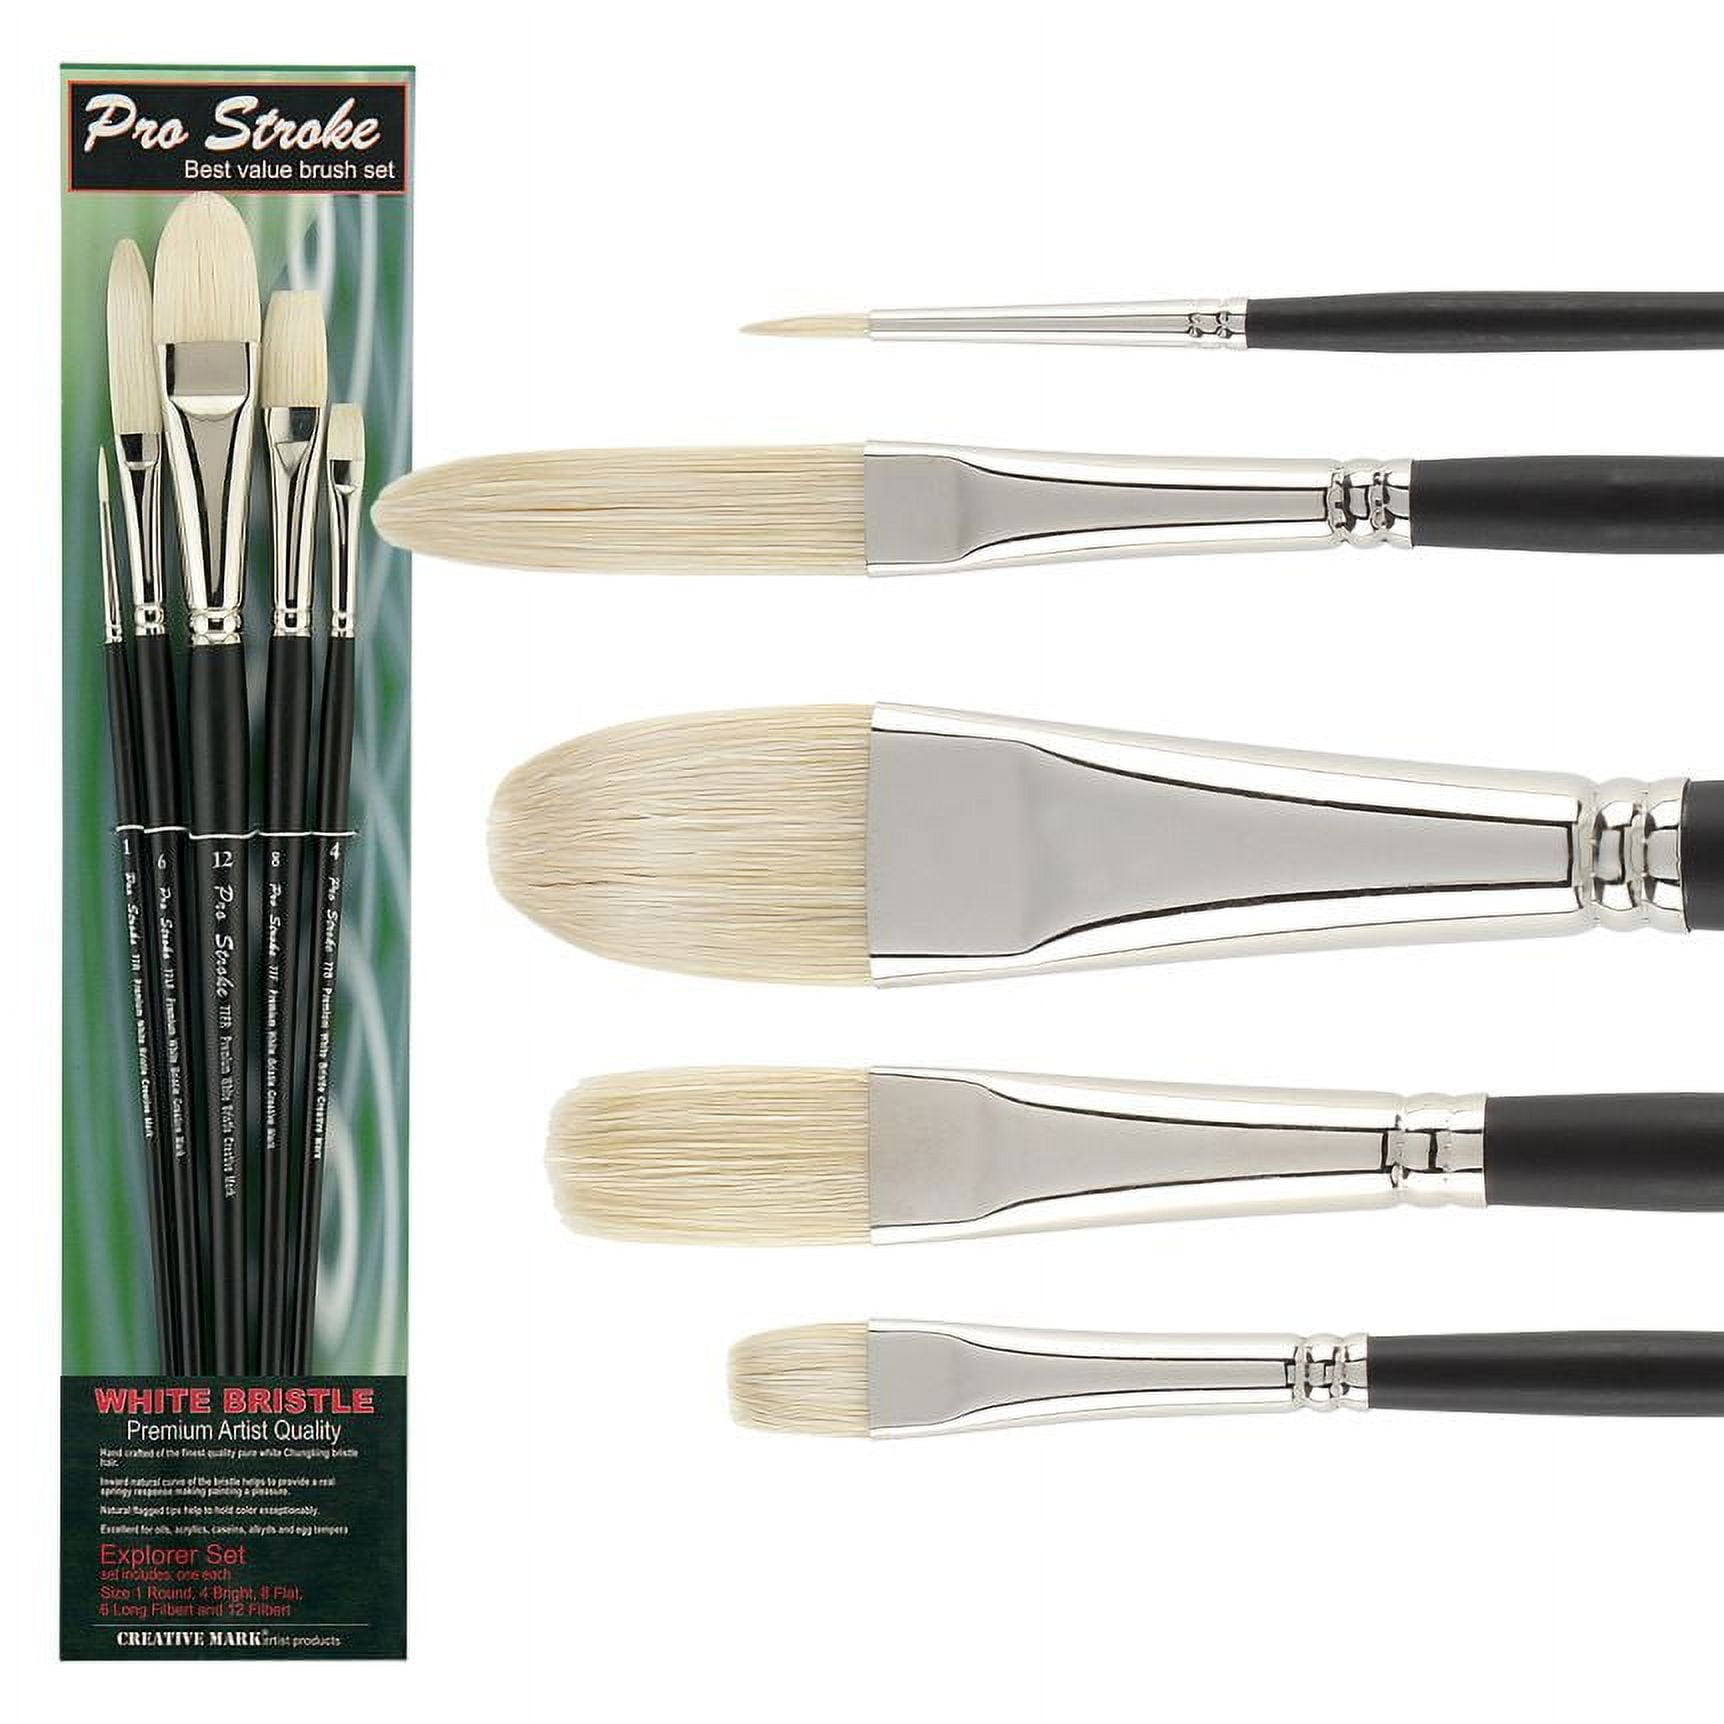 Creative Mark Pro-Stroke Powercryl Acrylic Brush, Bright #8